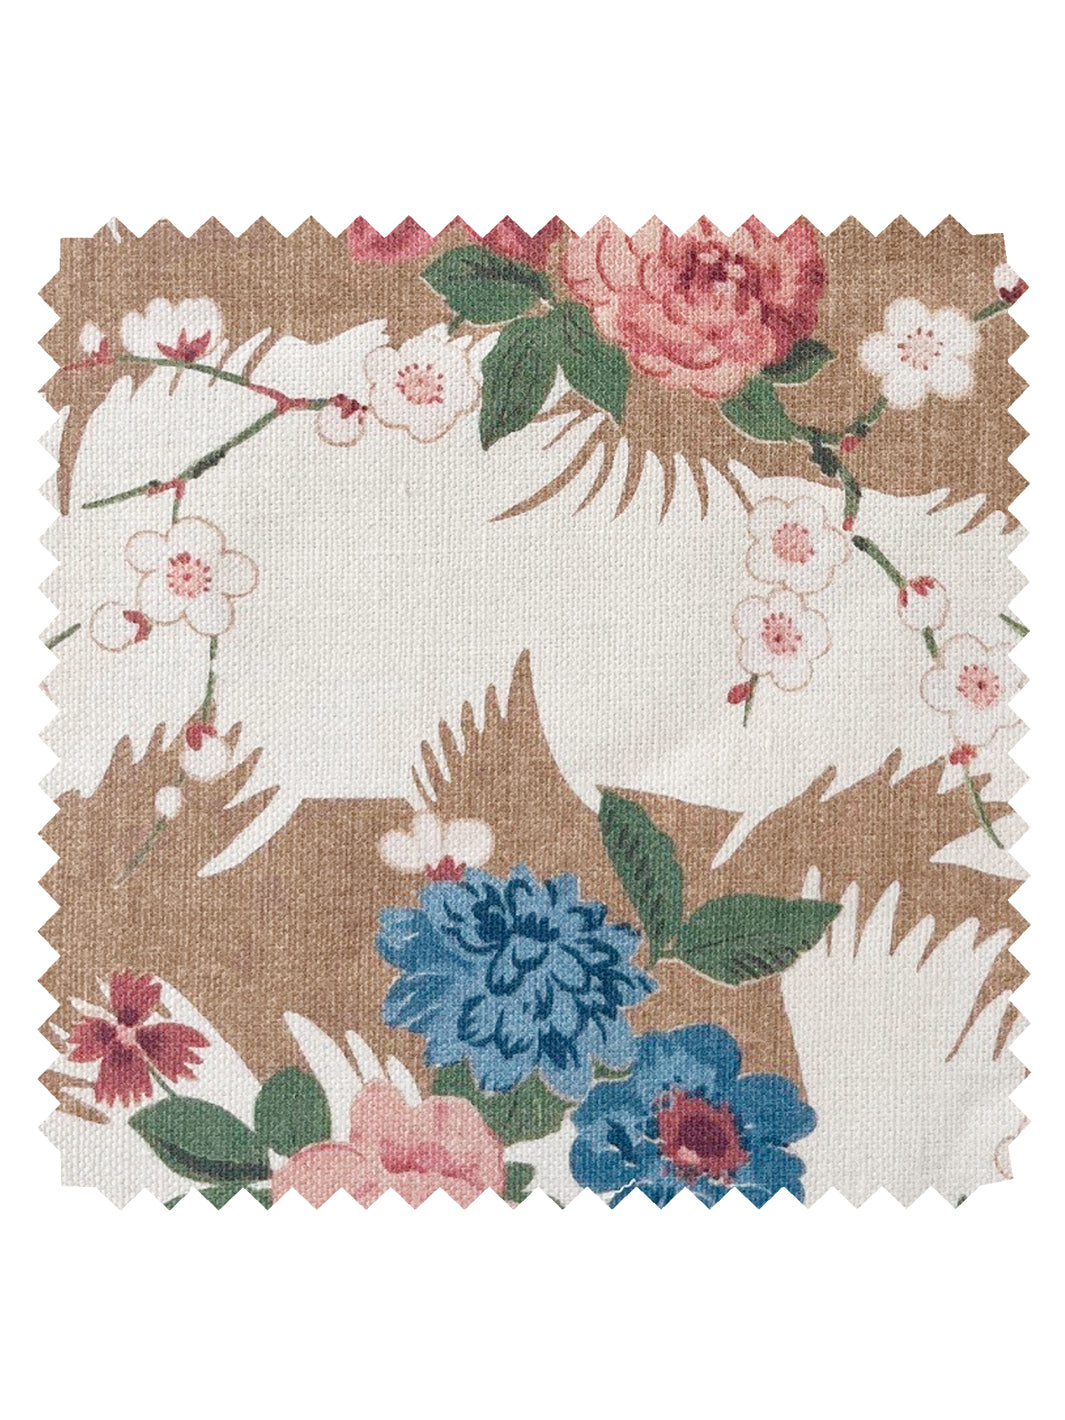 'Dora Chintz' Linen Fabric by Nathan Turner - Saddle Green